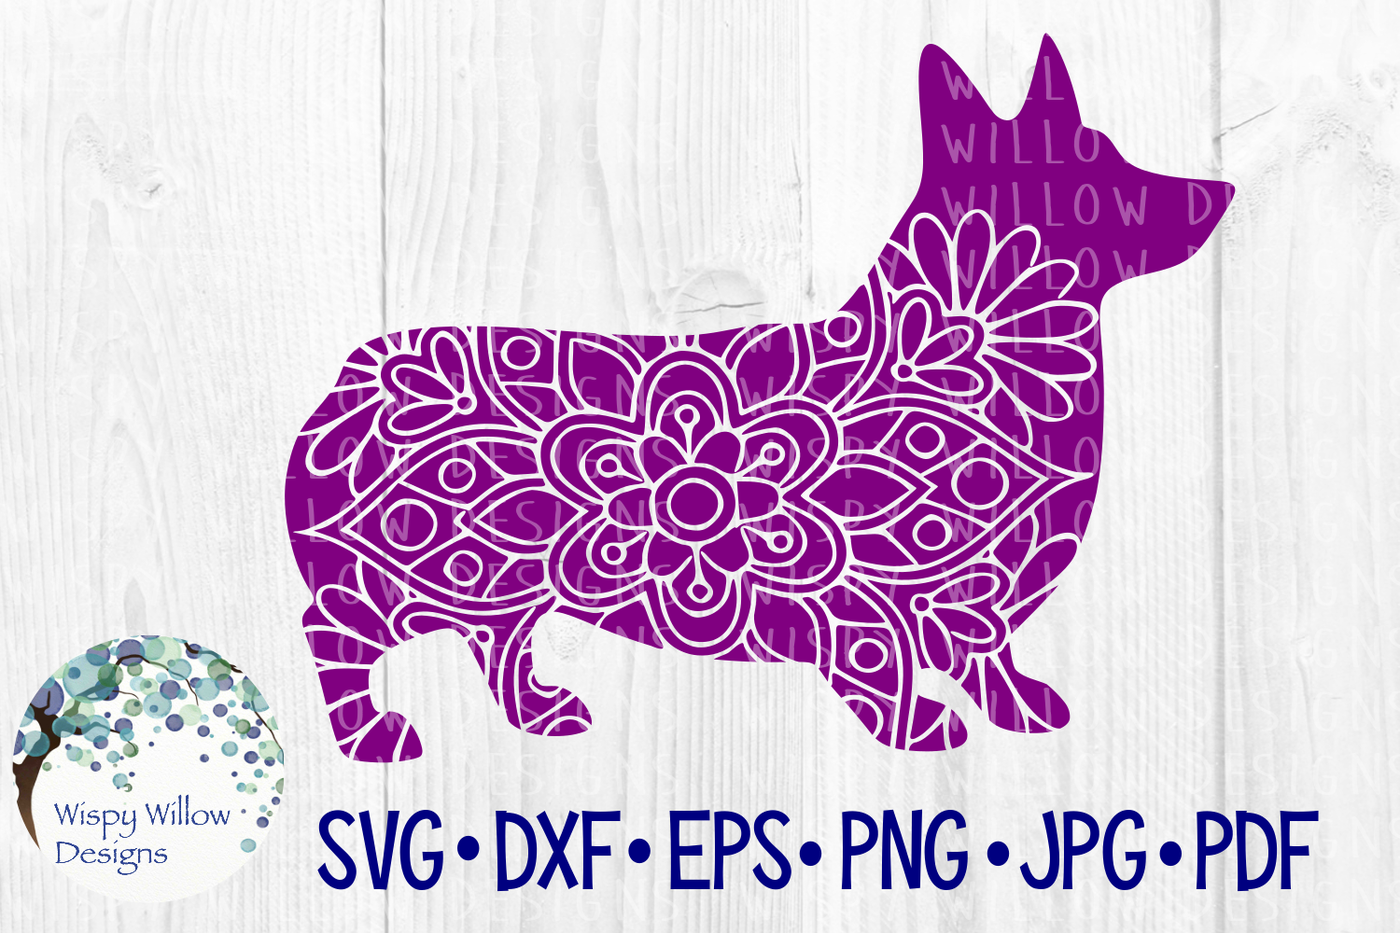 Download Corgi Dog Mandala Svg Dxf Eps Png Jpg Pdf By Wispy Willow Designs Thehungryjpeg Com